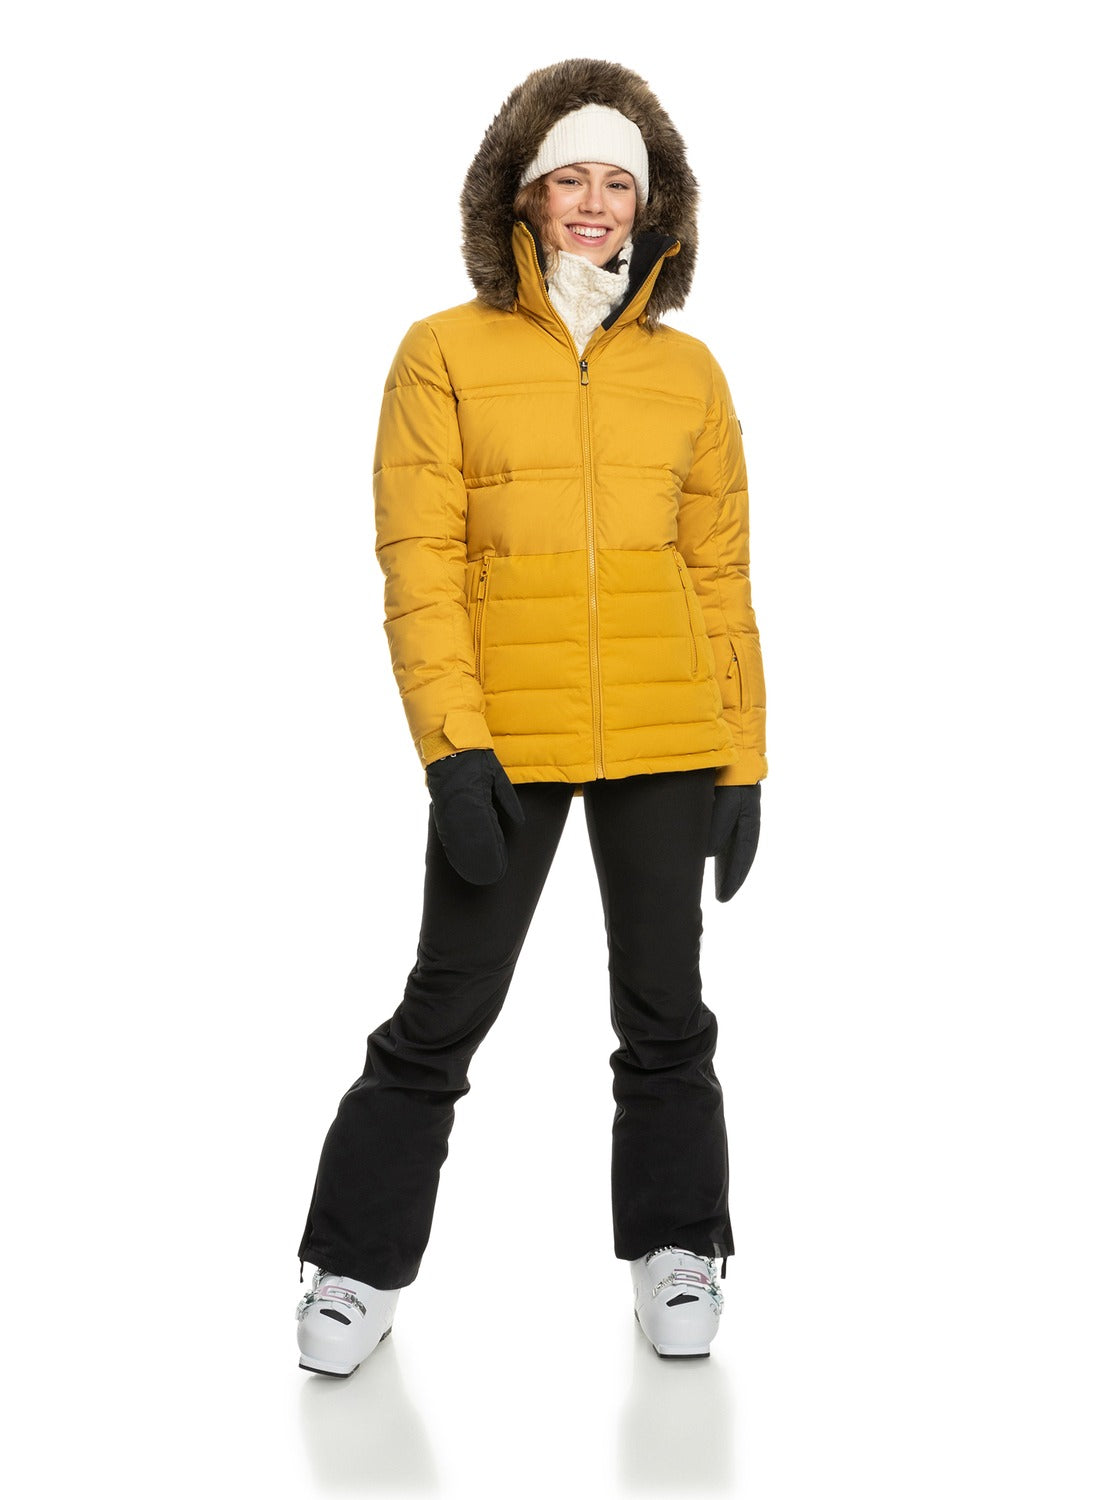 Shop Roxy Ski and Snow Jackets in Australia – Elevation107